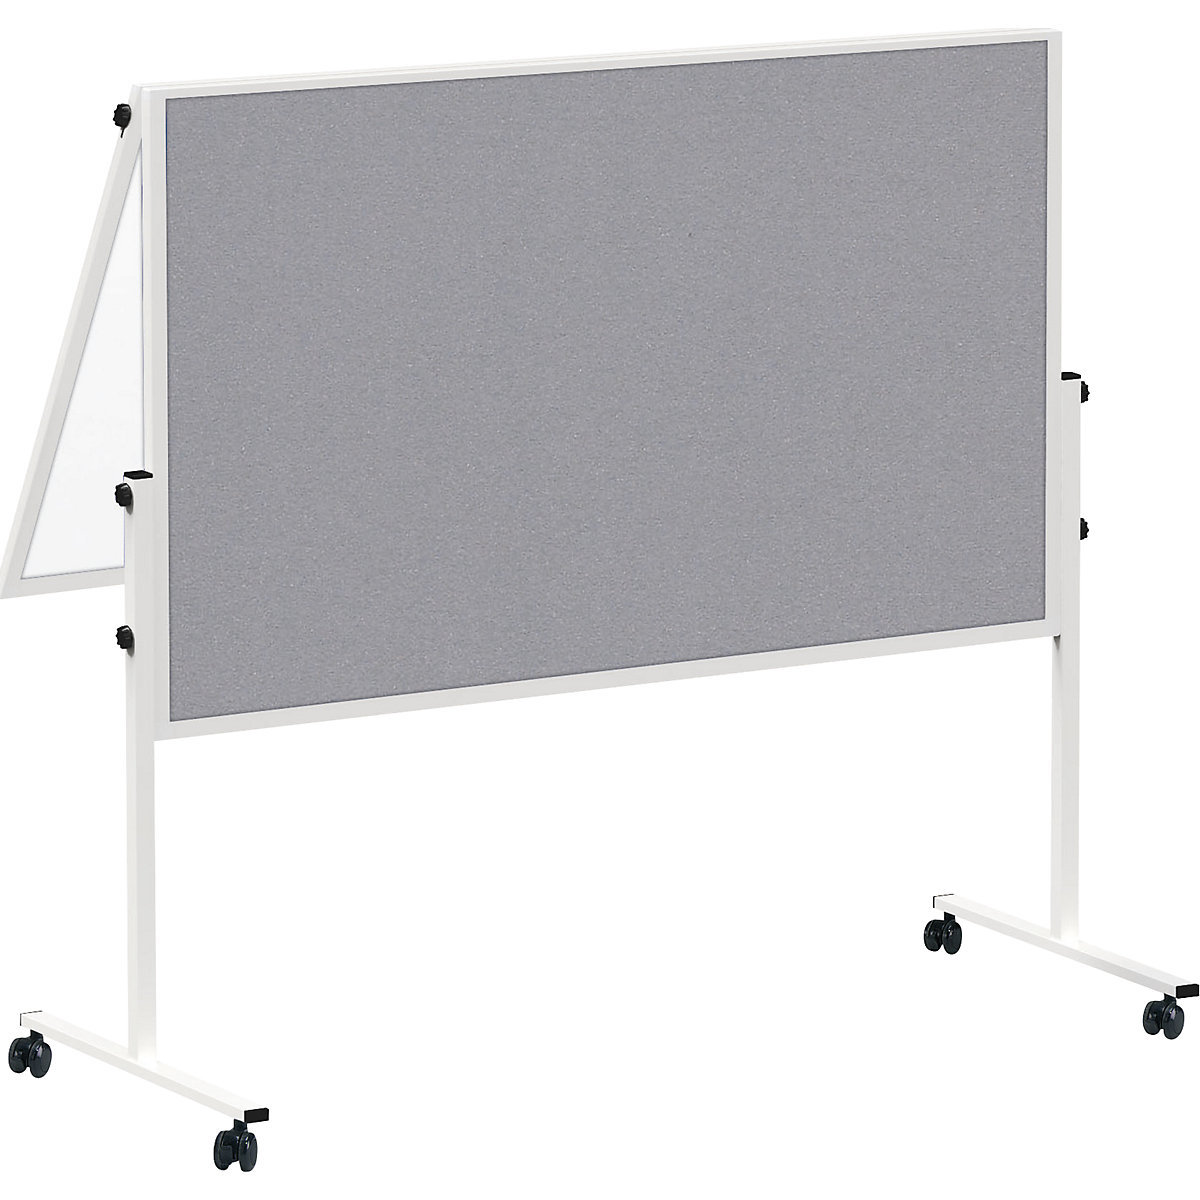 MAULsolid presentation board, mobile – MAUL, folding, whiteboard/felt surface grey-5